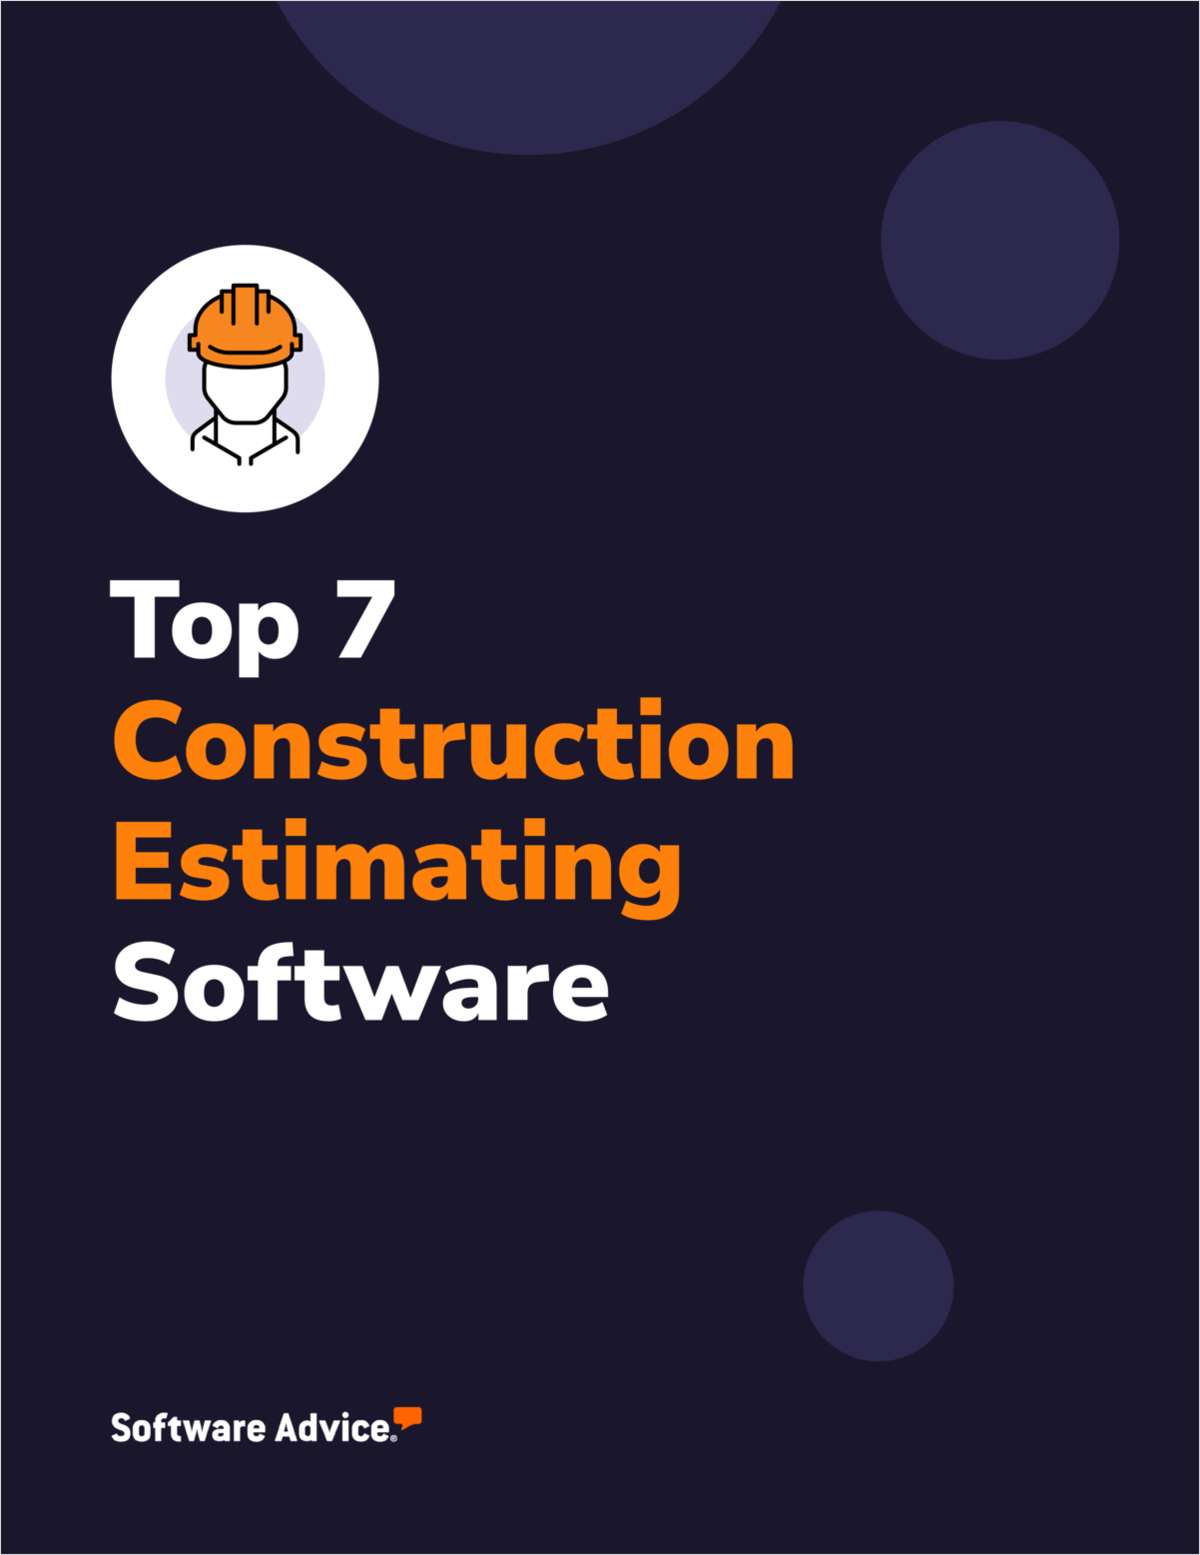 Top 7 Construction Estimating Software